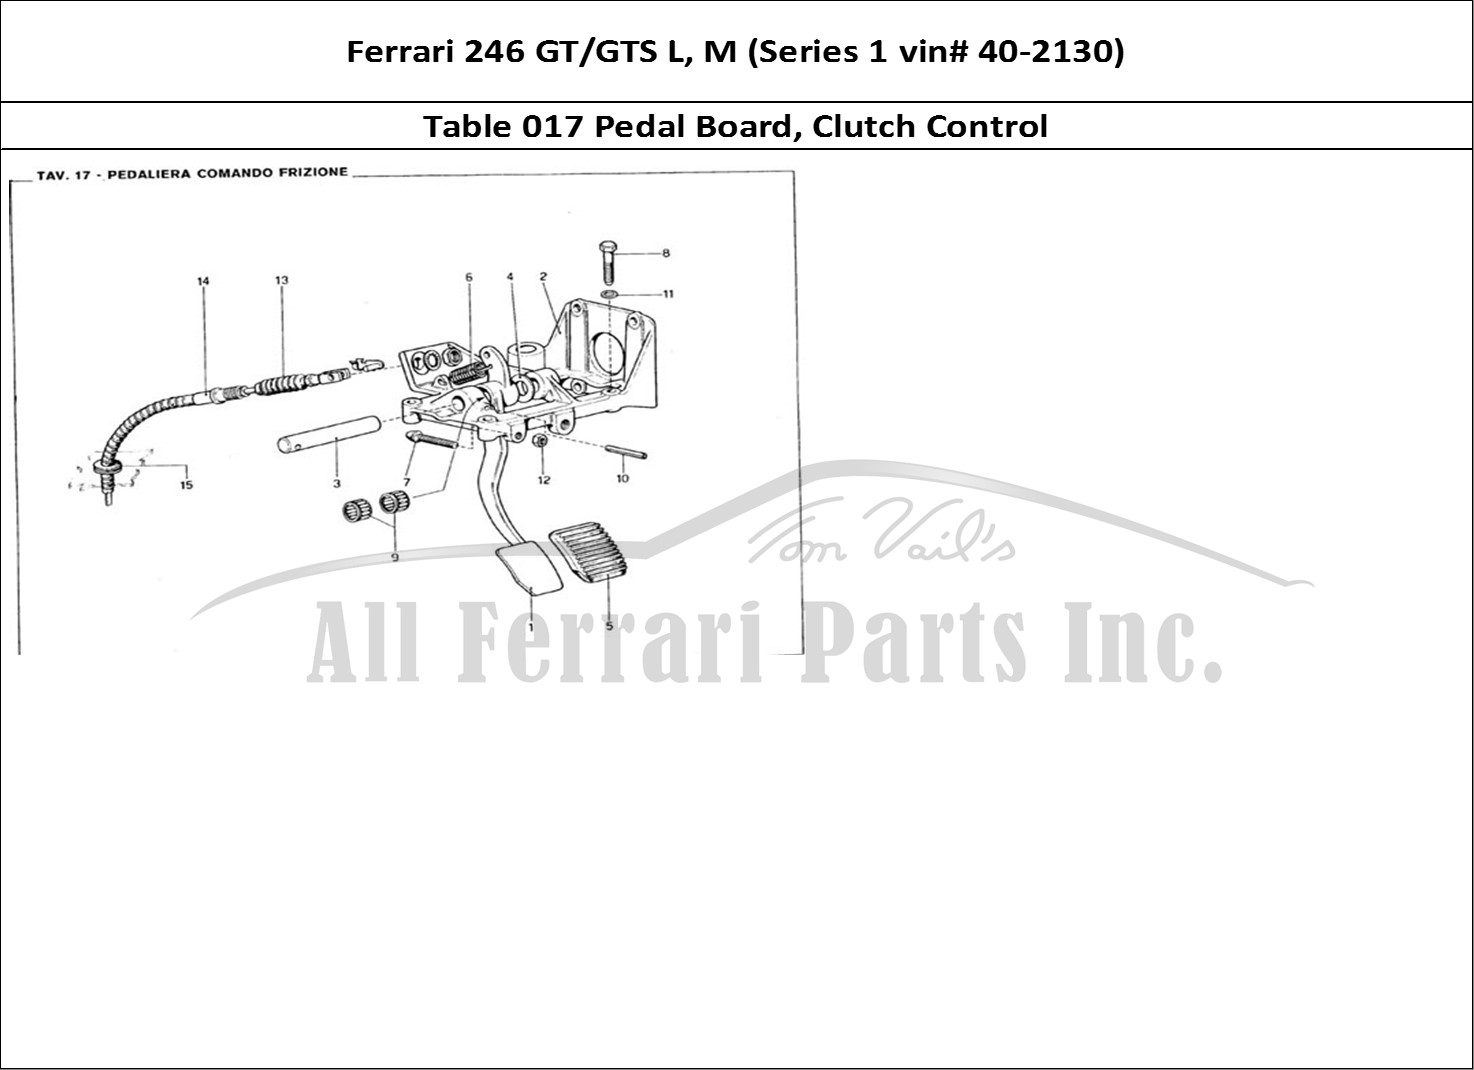 Ferrari Parts Ferrari 246 GT Series 1 Page 017 Pedal Board - Clutch Cont